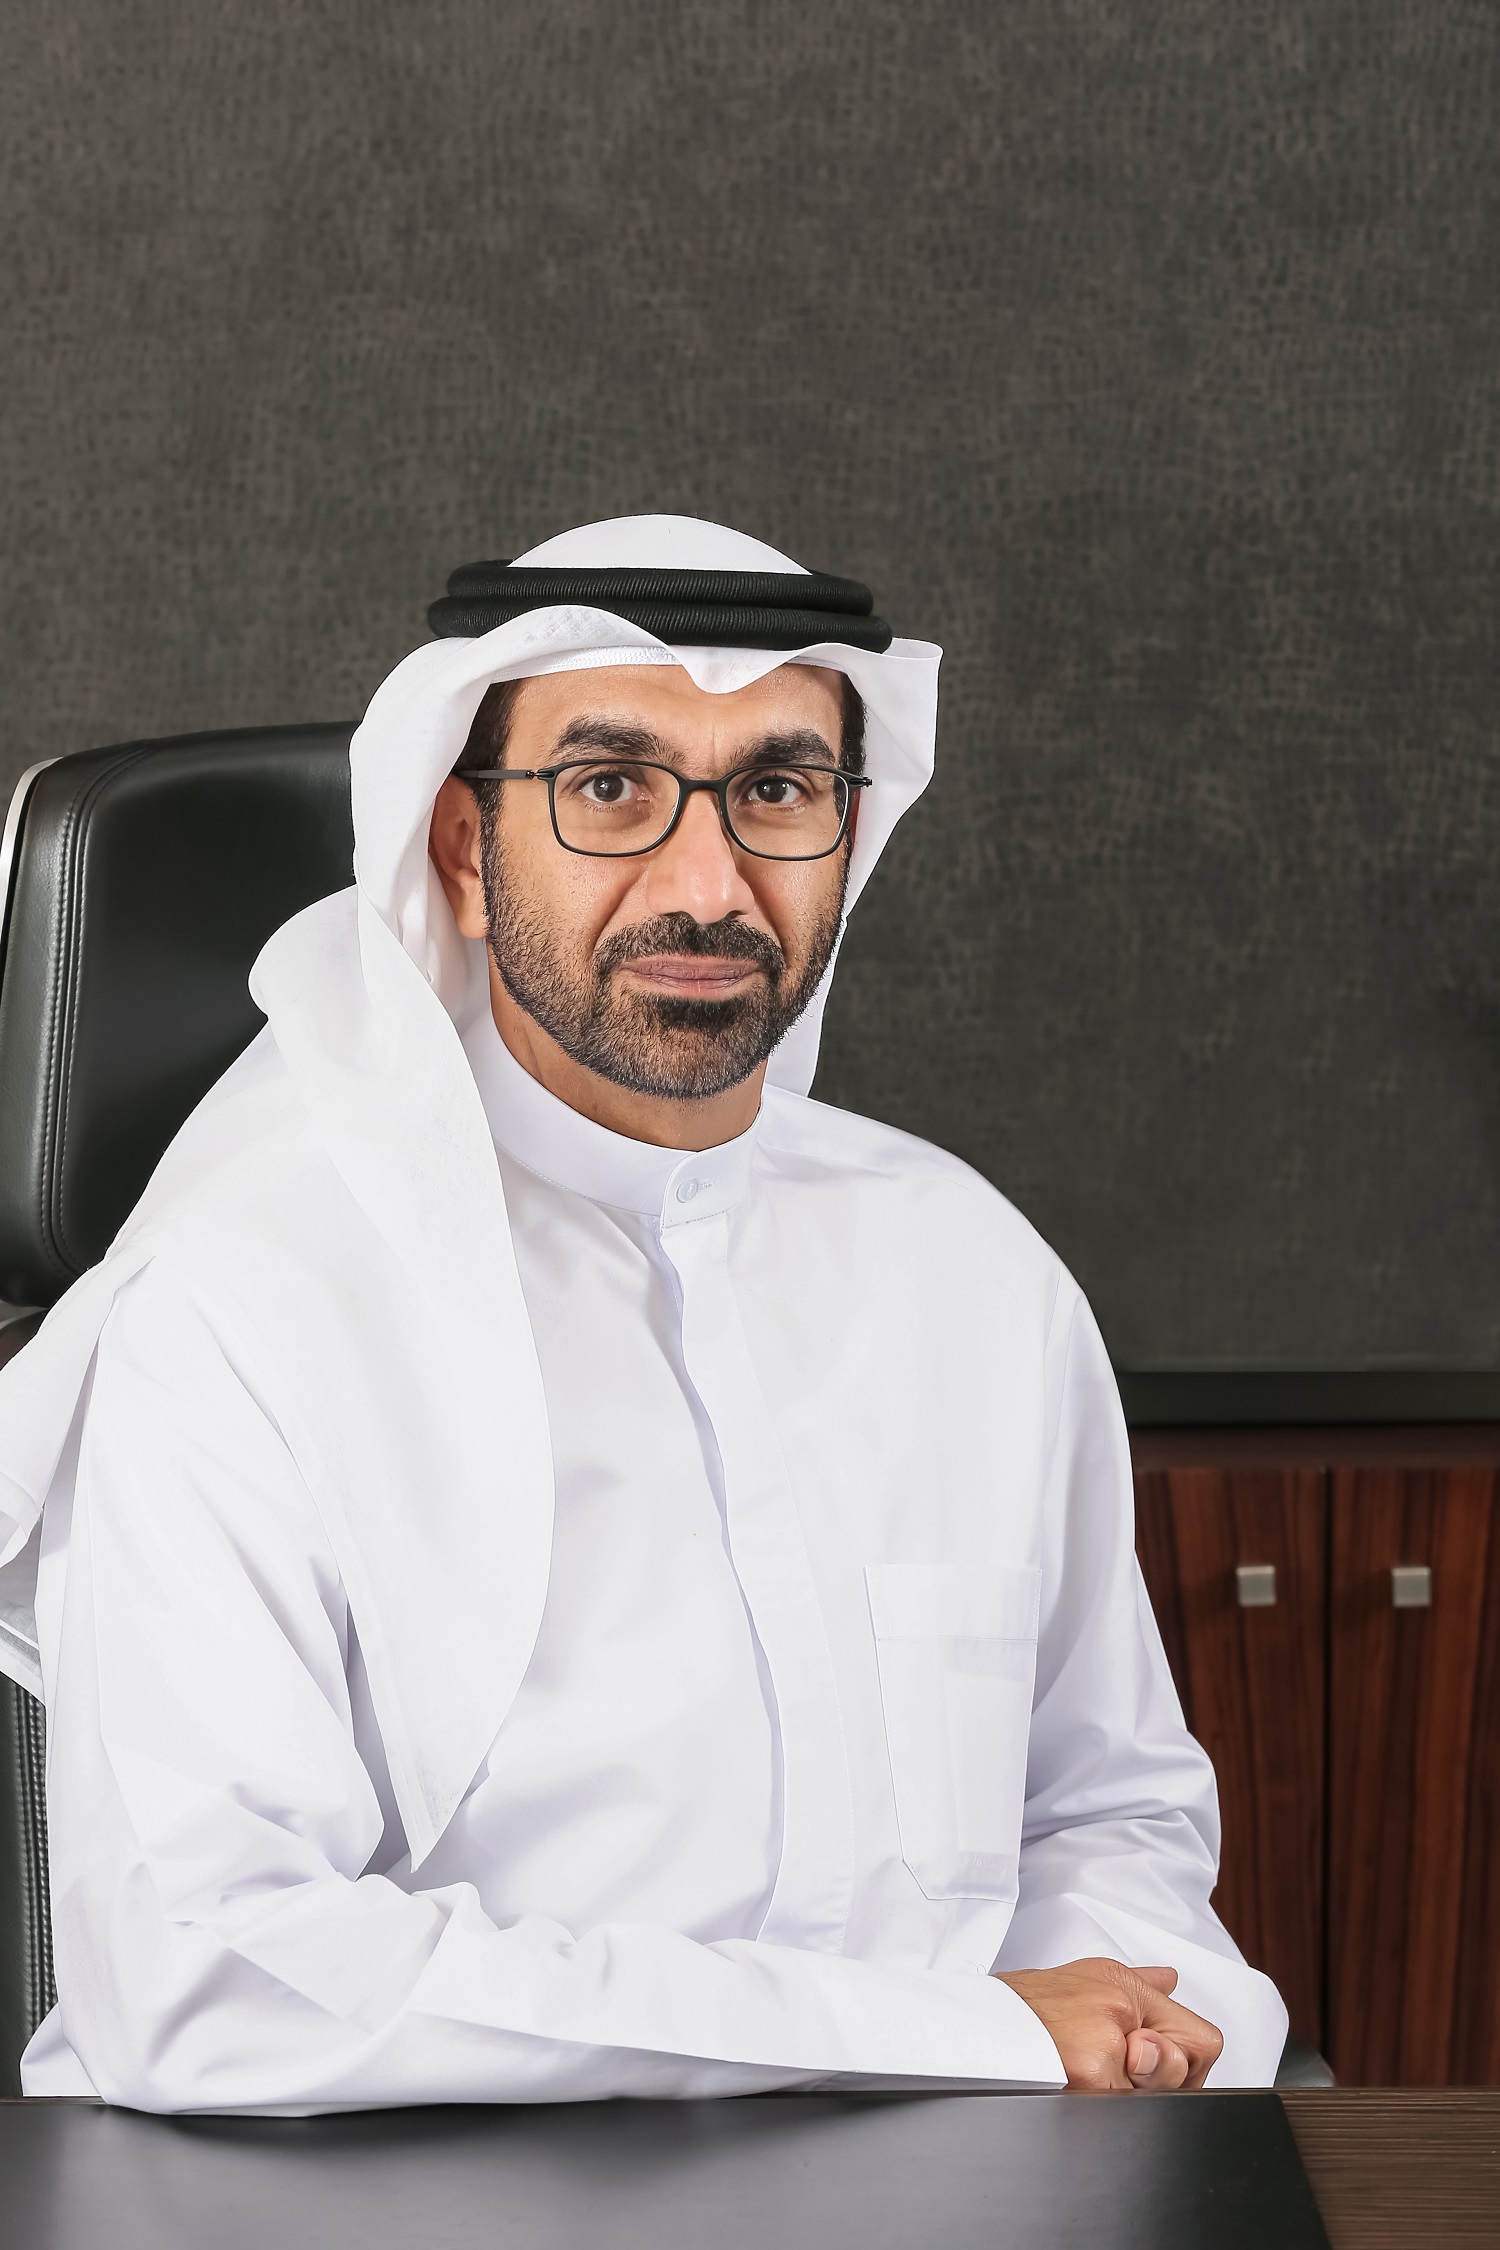 Emirates NBD’s 9M’22 profit rises 25% to AED 9.1 billion